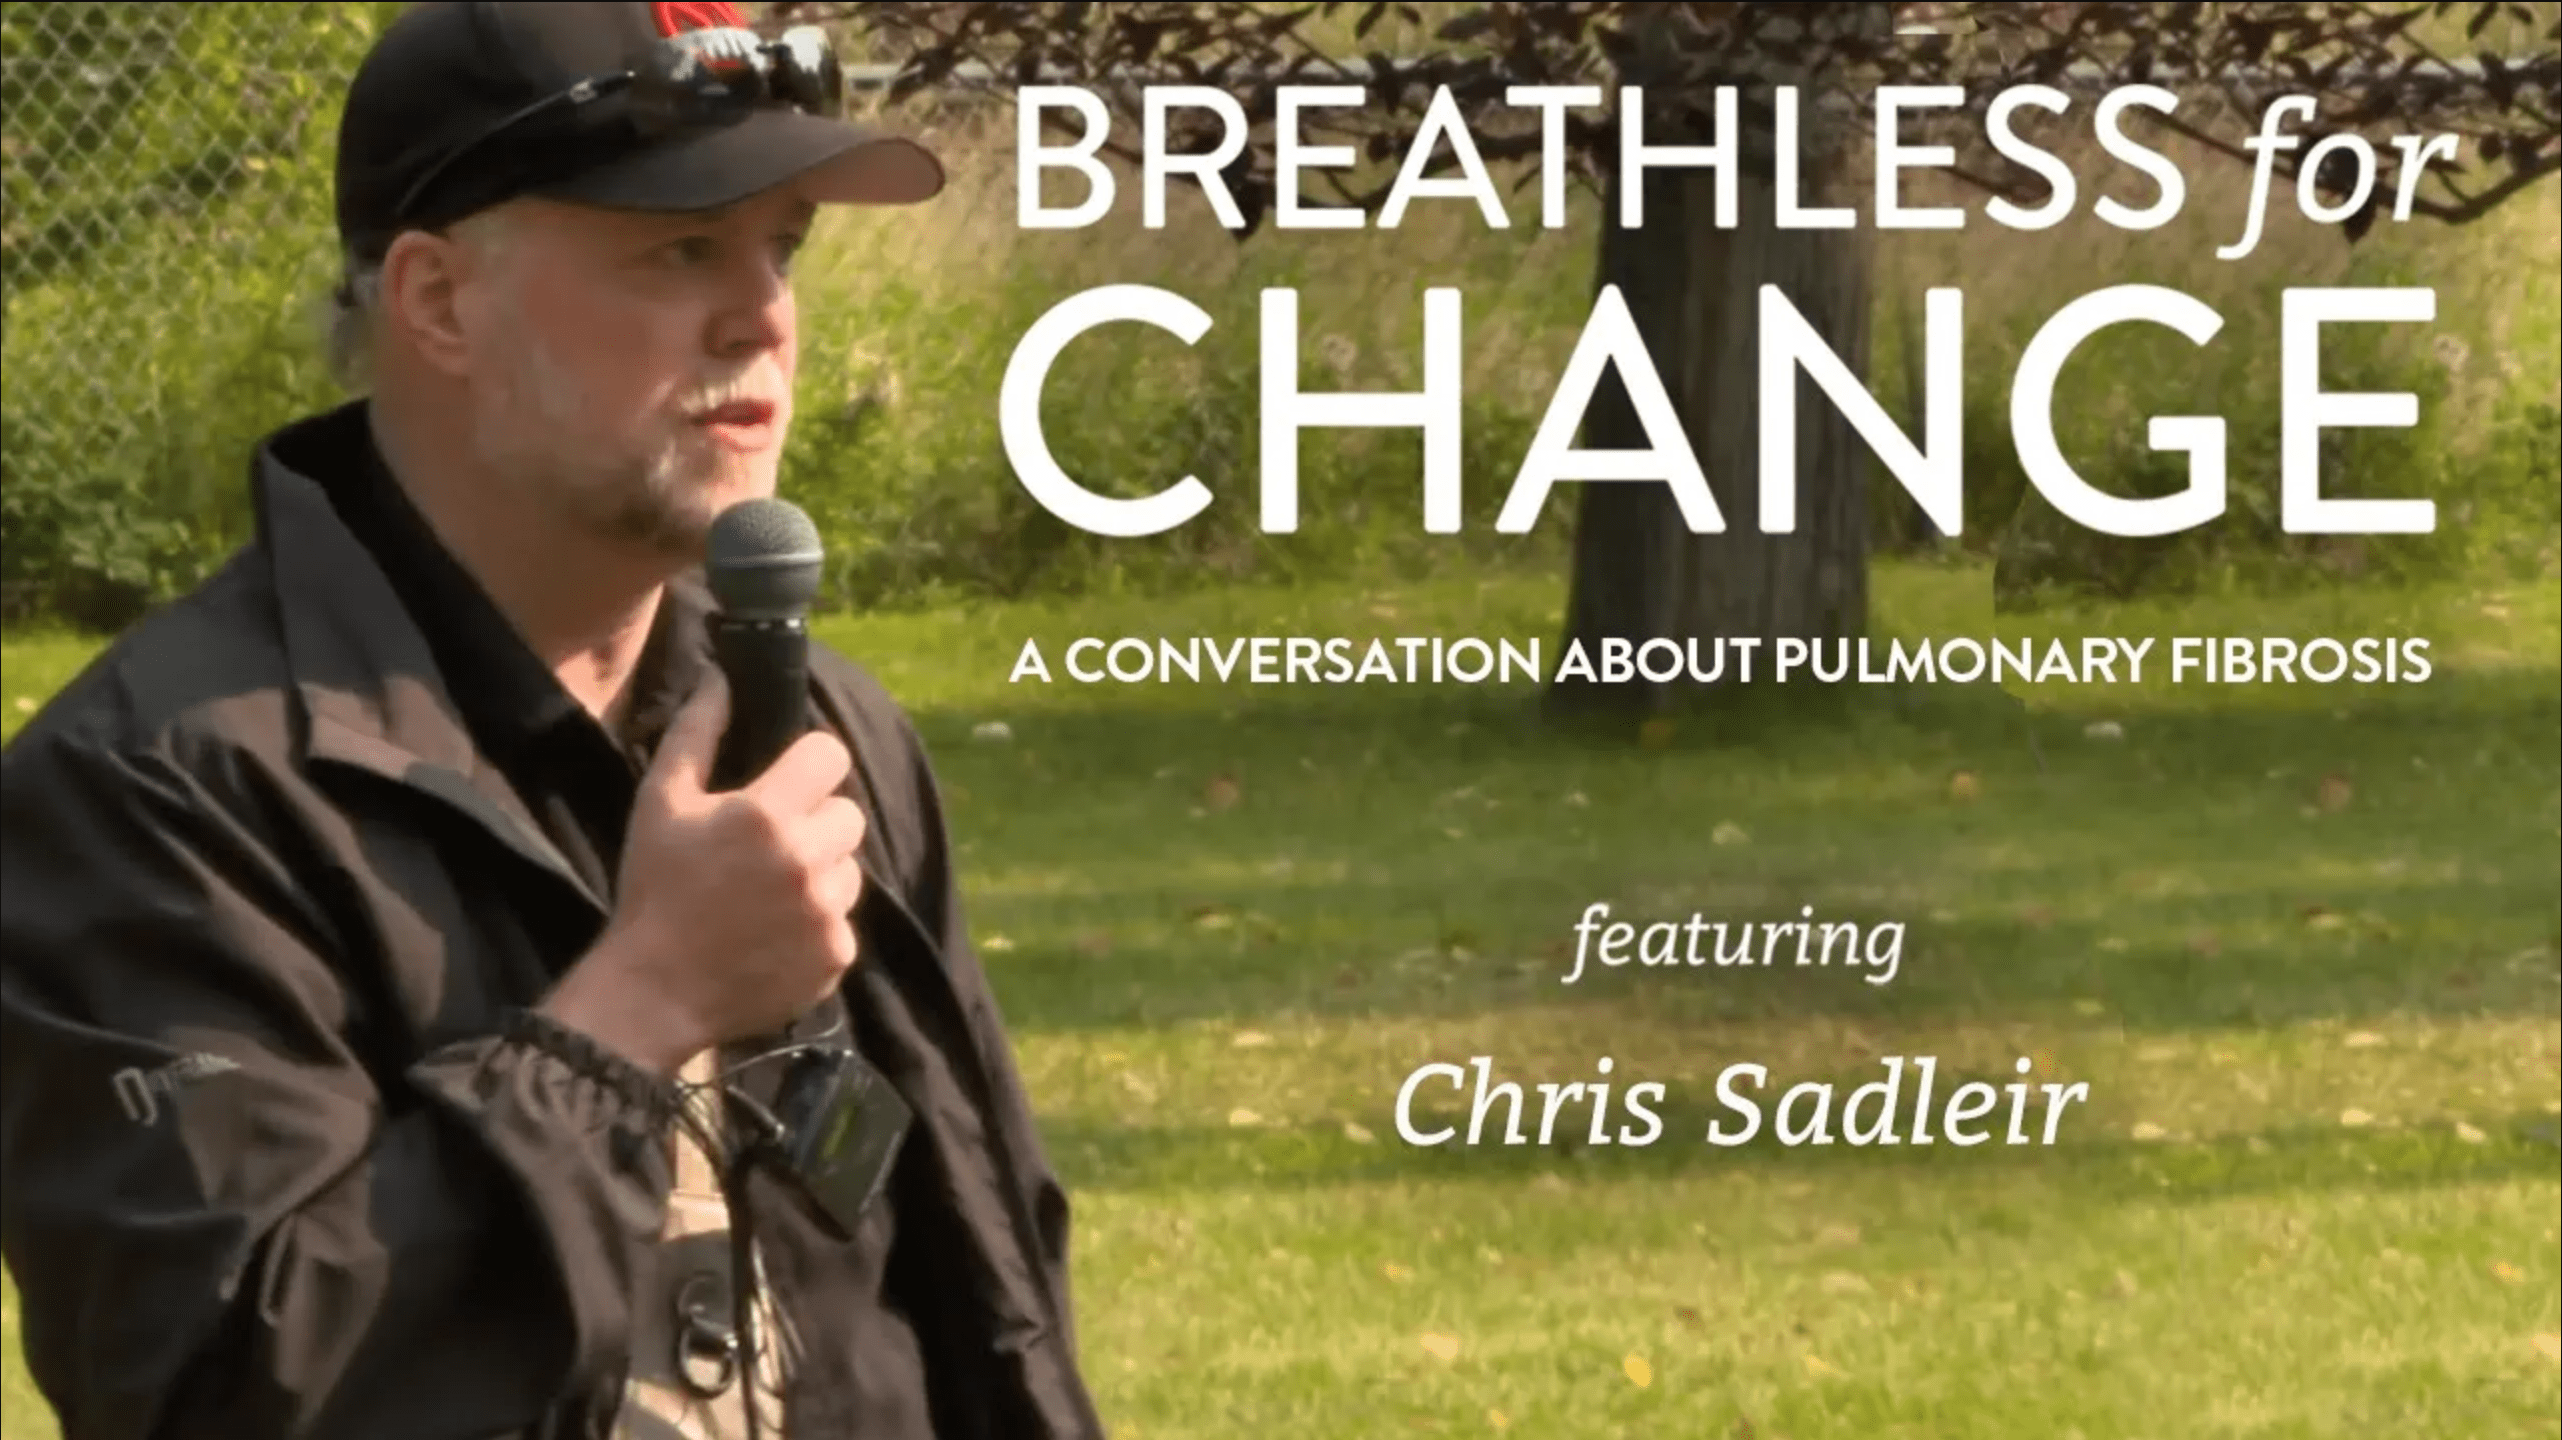 A conversation about PF with Chris Sadleir